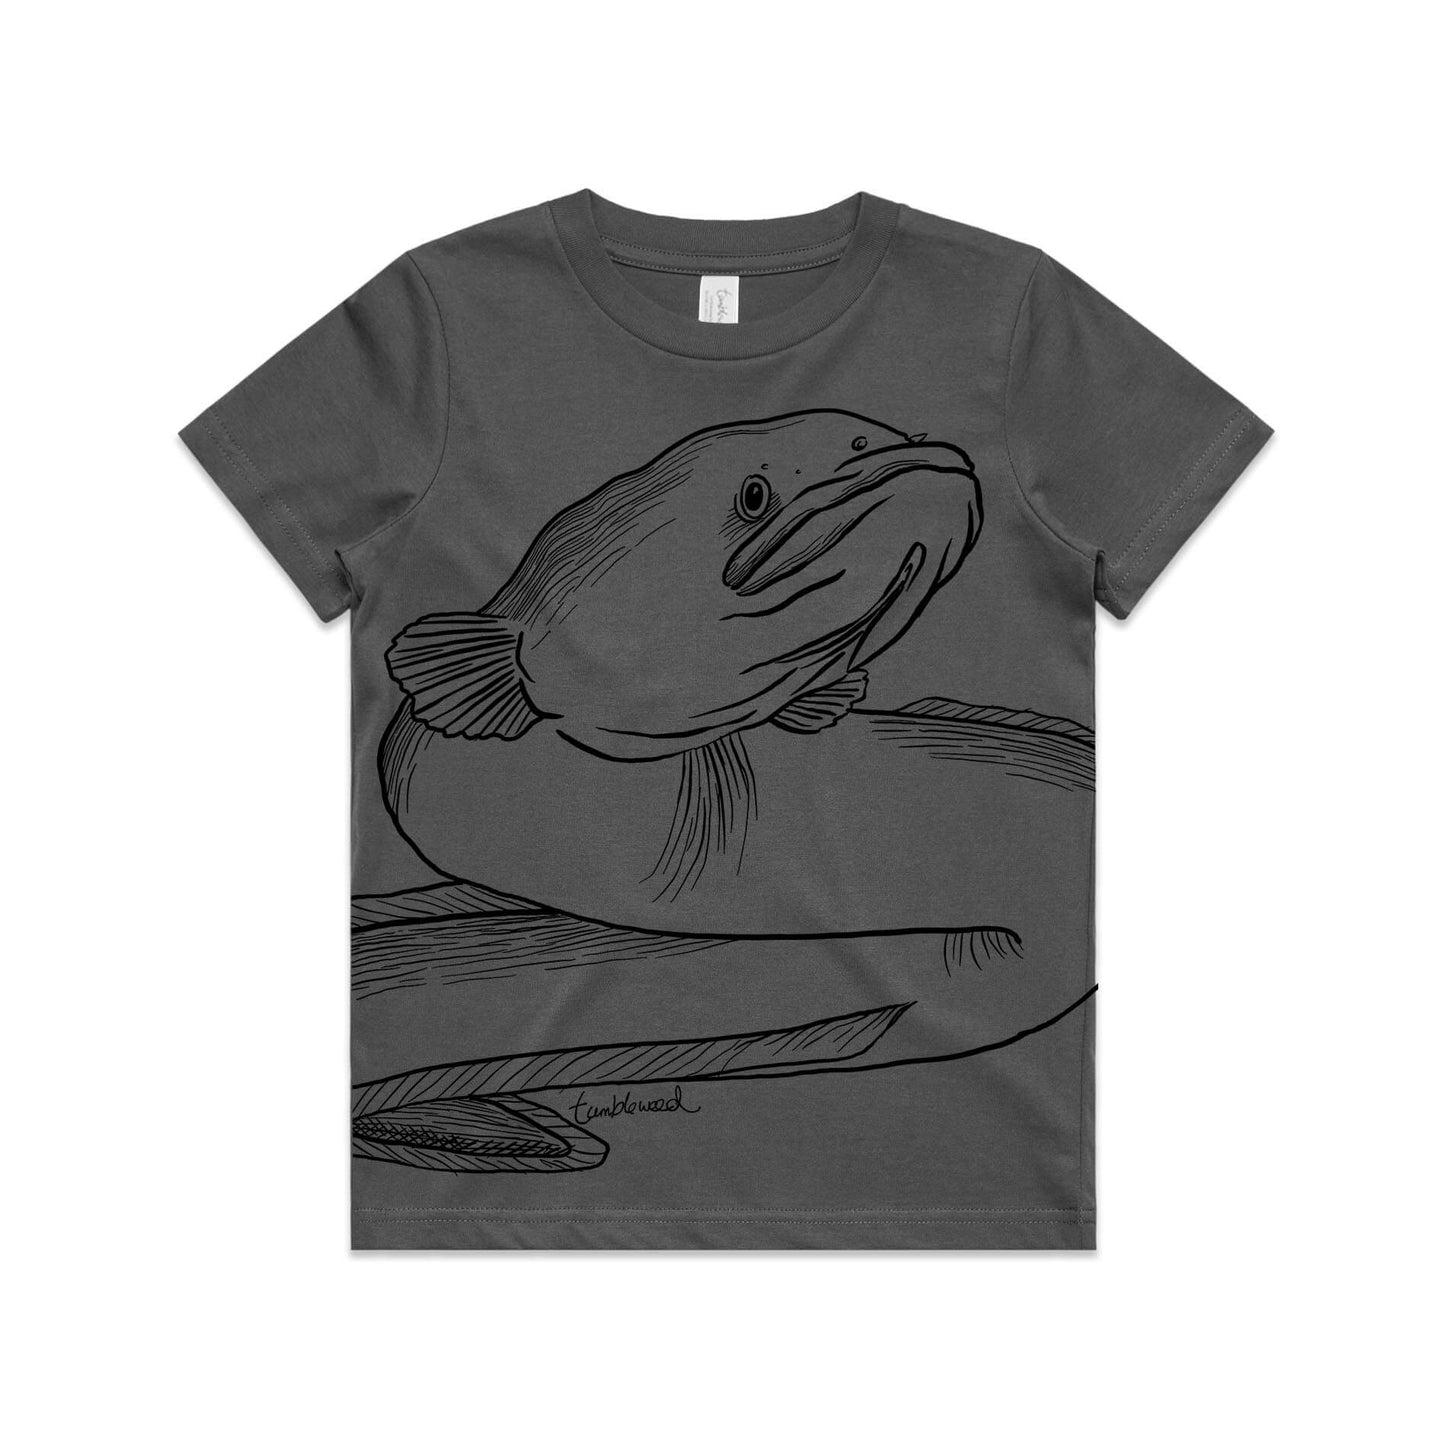 Charcoal, cotton kids' t-shirt with screen printed Long fin eel/tuna design.